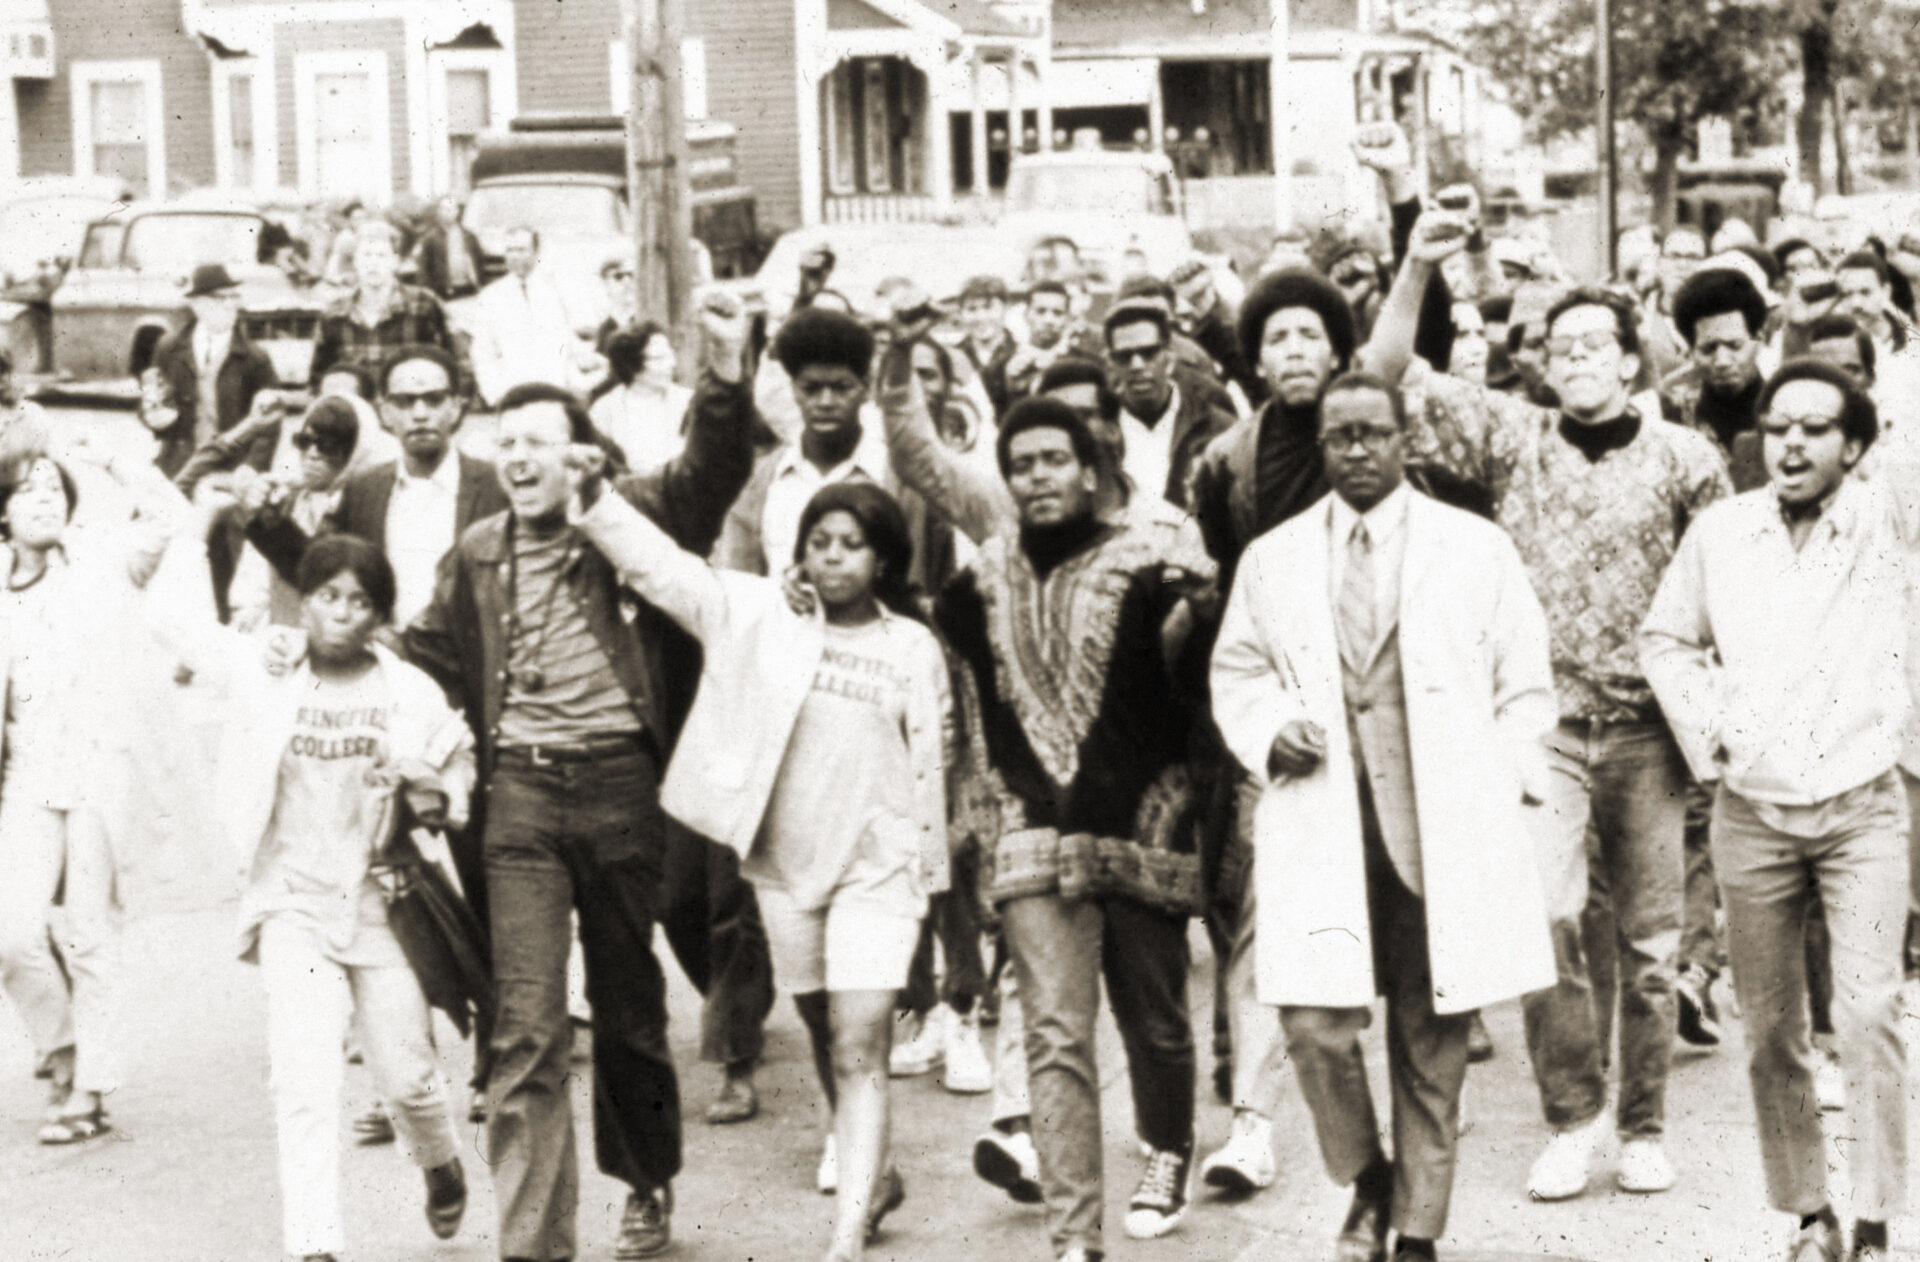 Springfield College students protesting circa 1969-1970